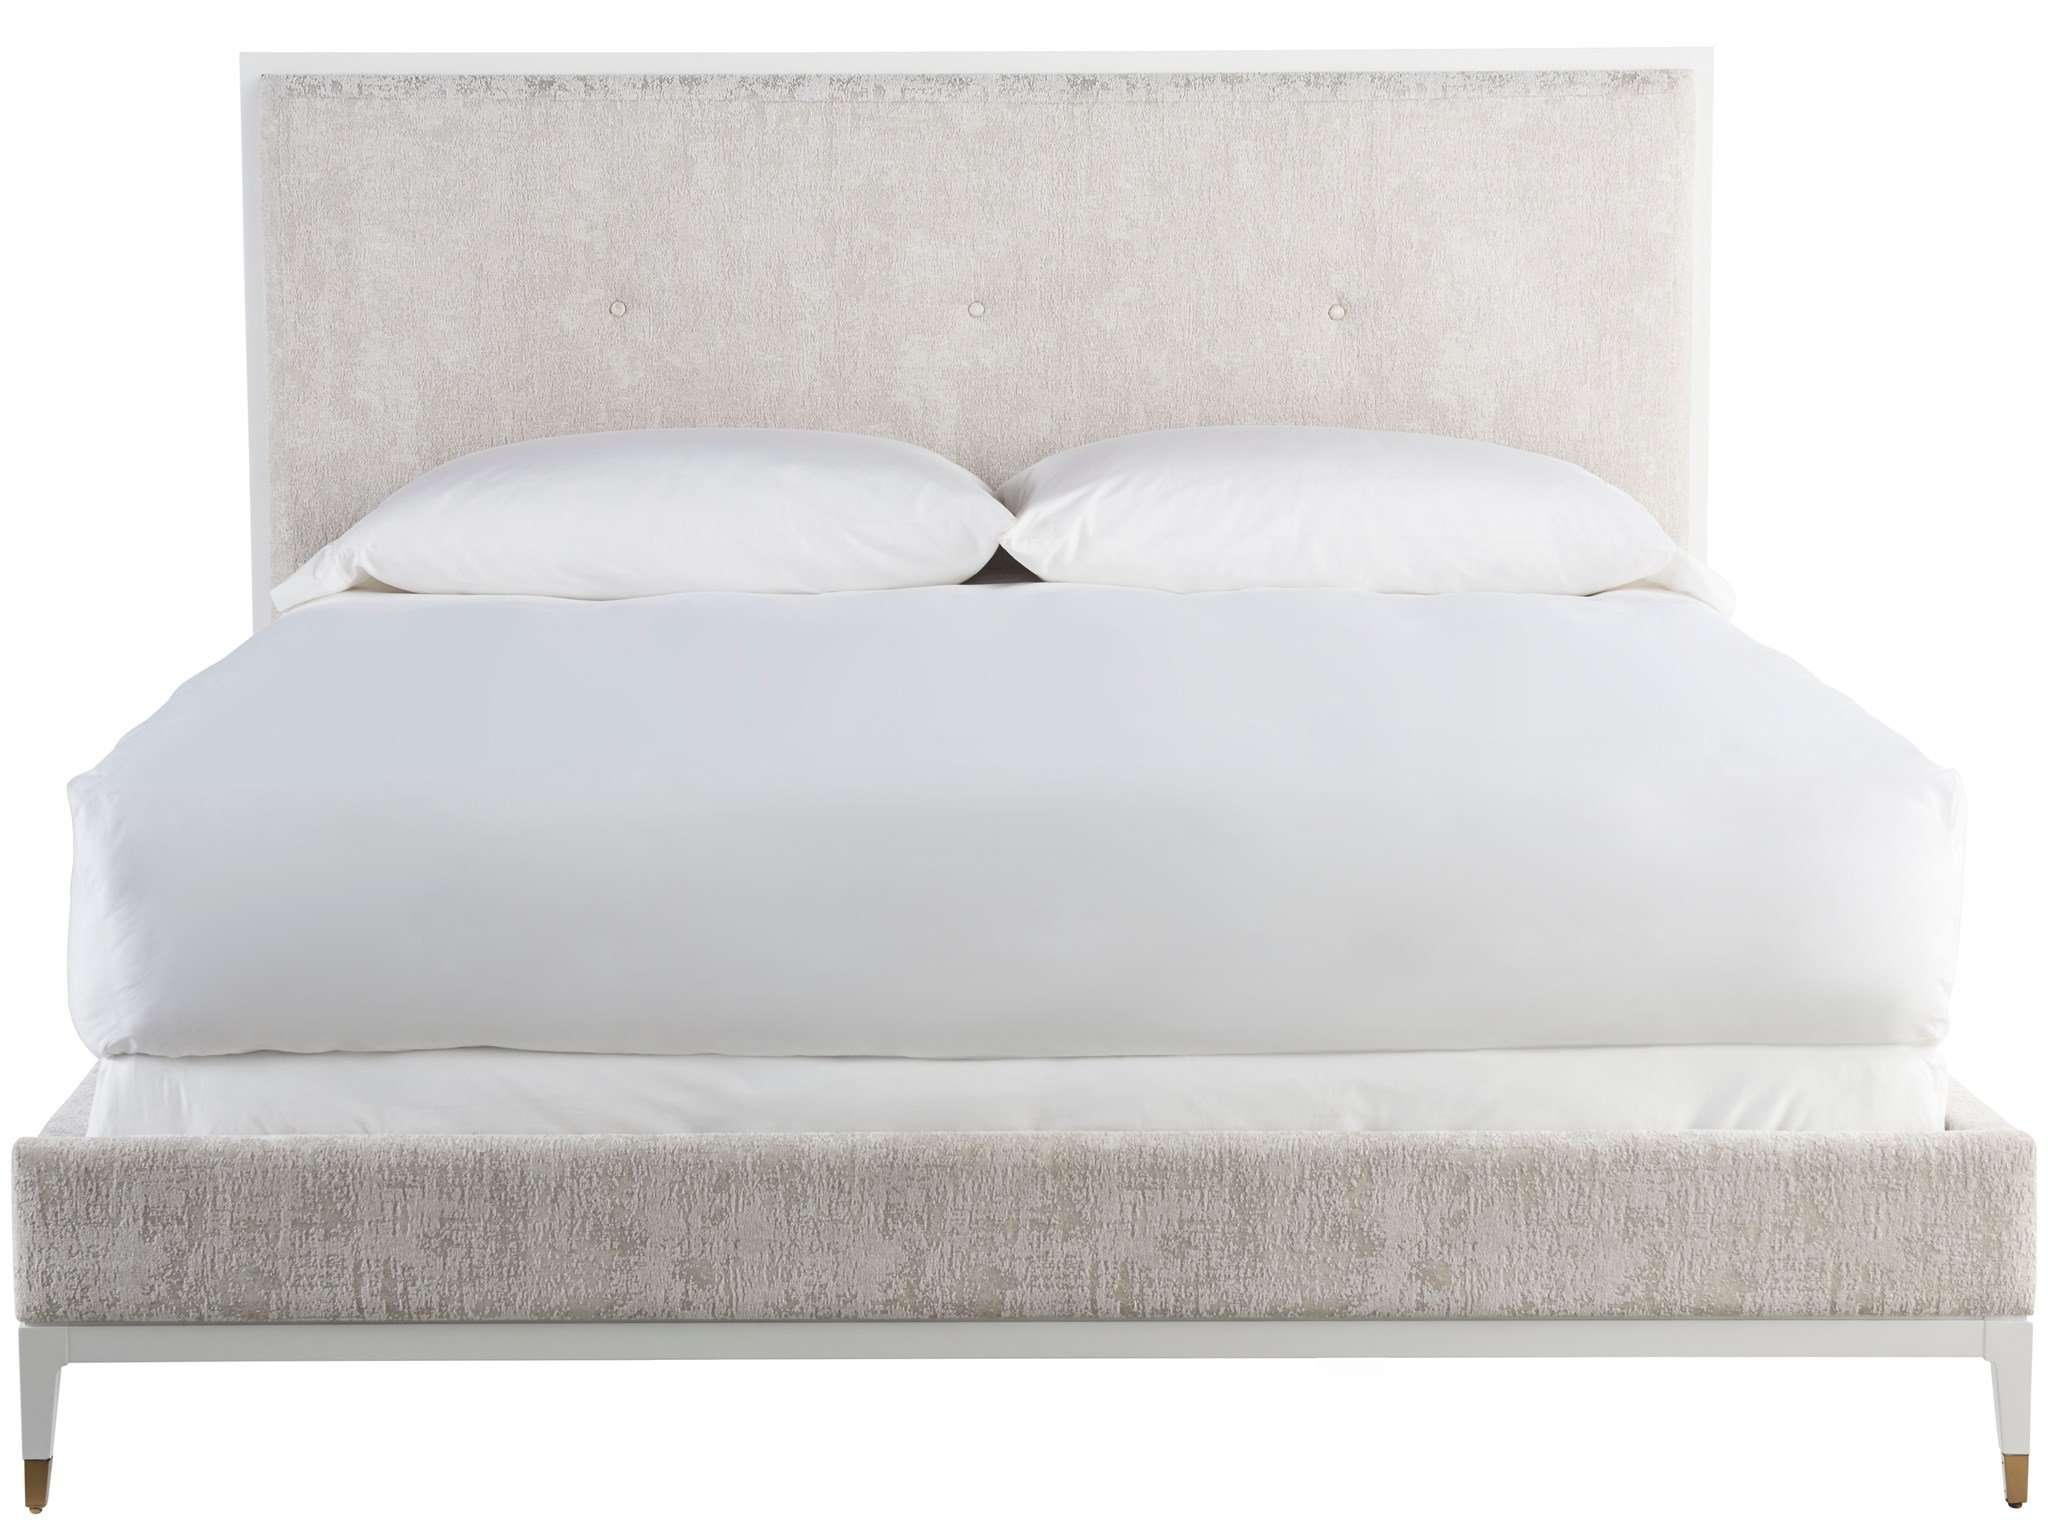 Miranda Kerr in Bed Wallpapers